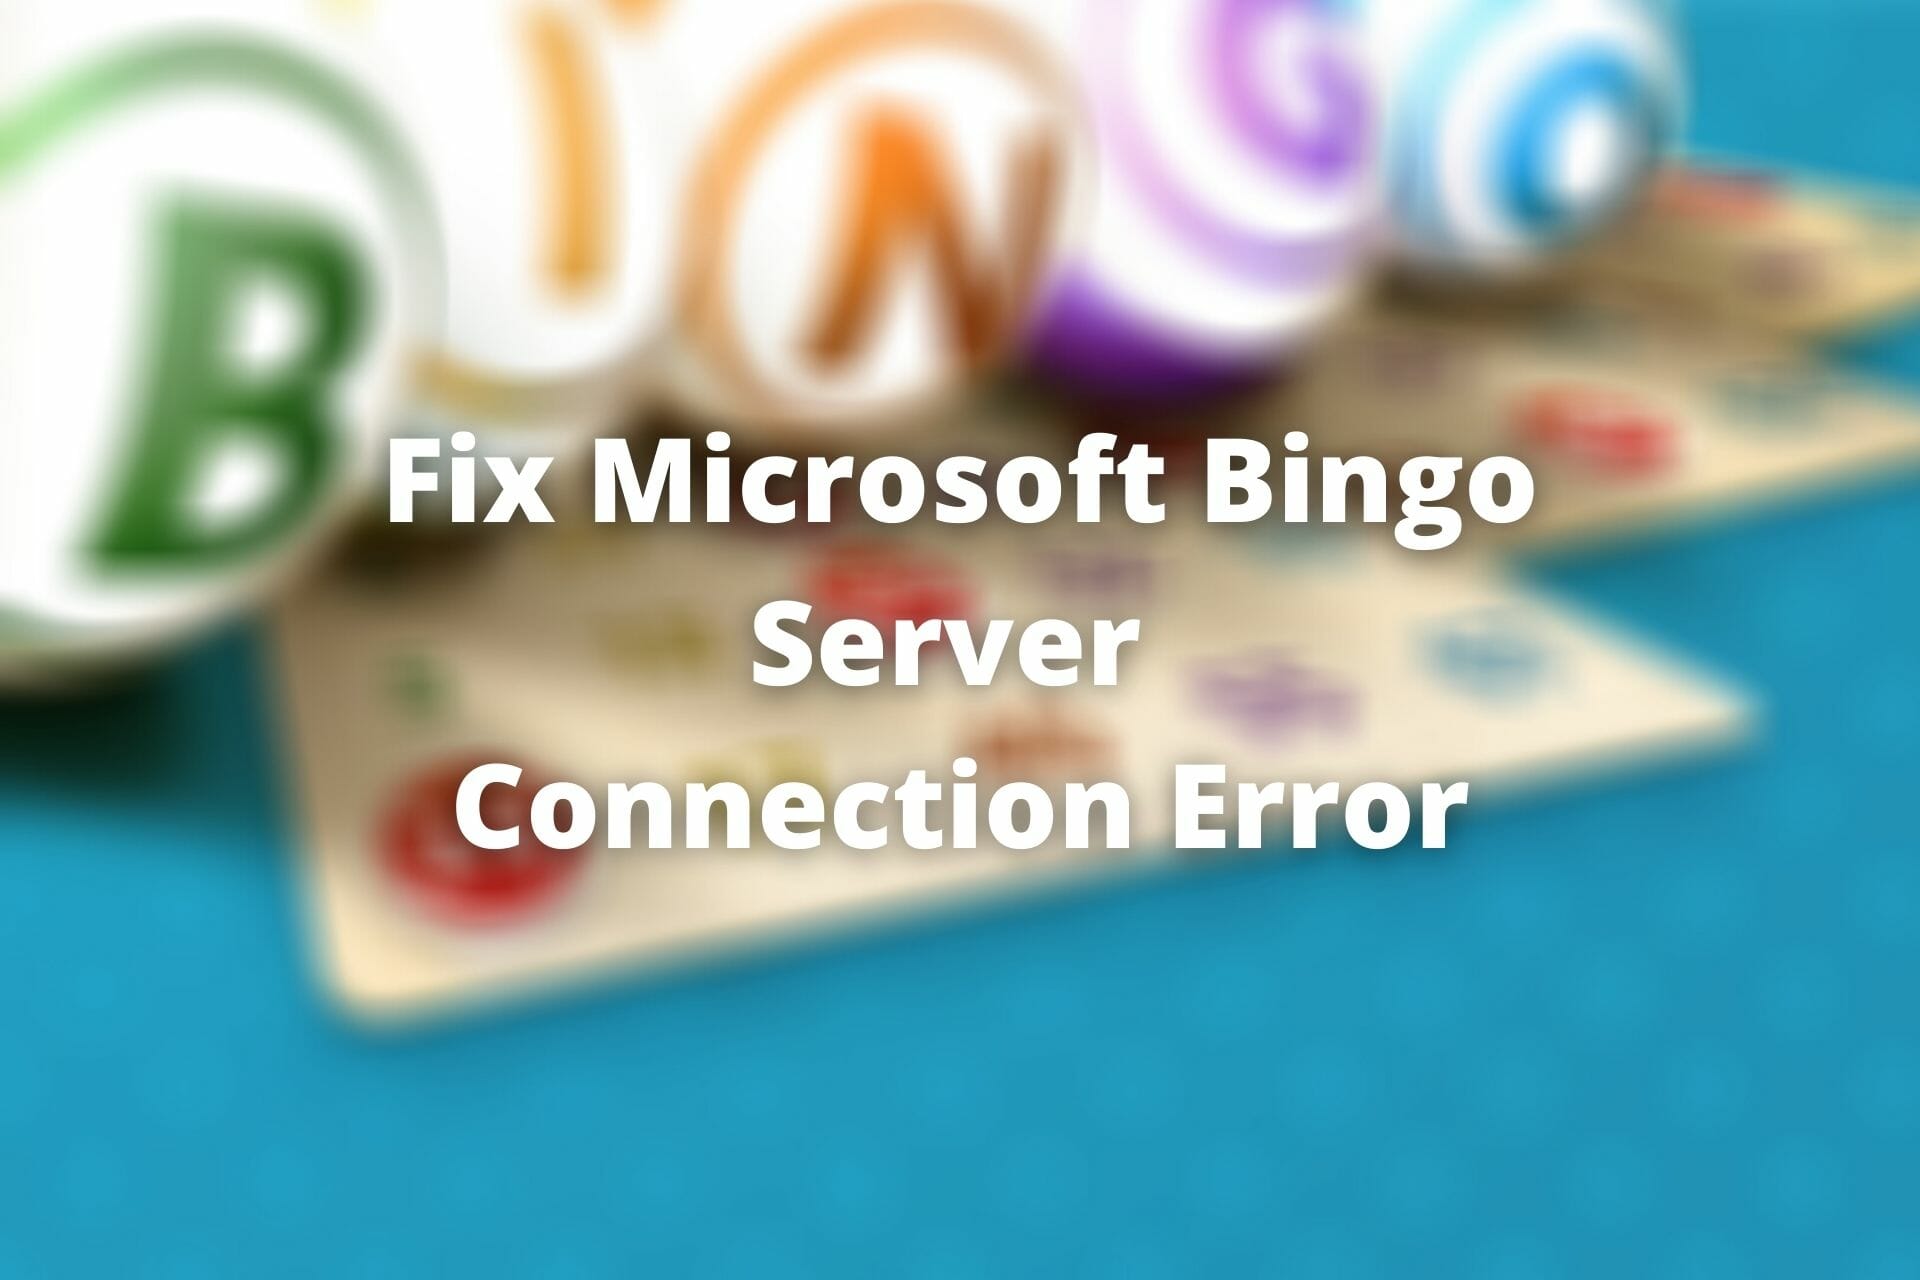 Fix Microsoft Bingo Server Connection Error